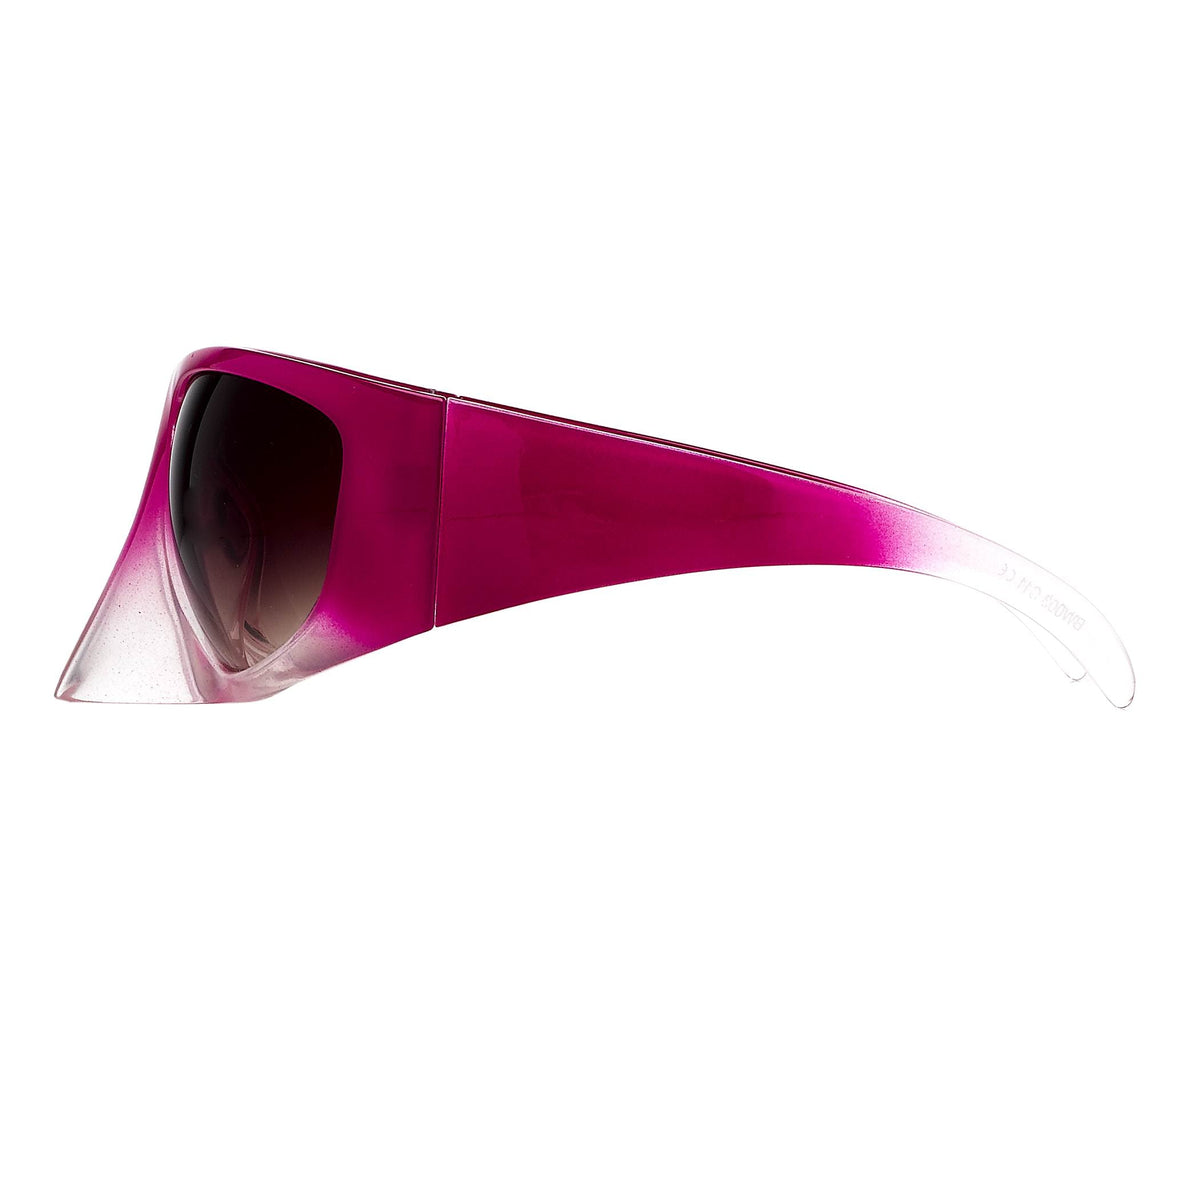 Bernhard Willhelm 3 C11 Mask Sunglasses by LINDA FARROW – LINDA 